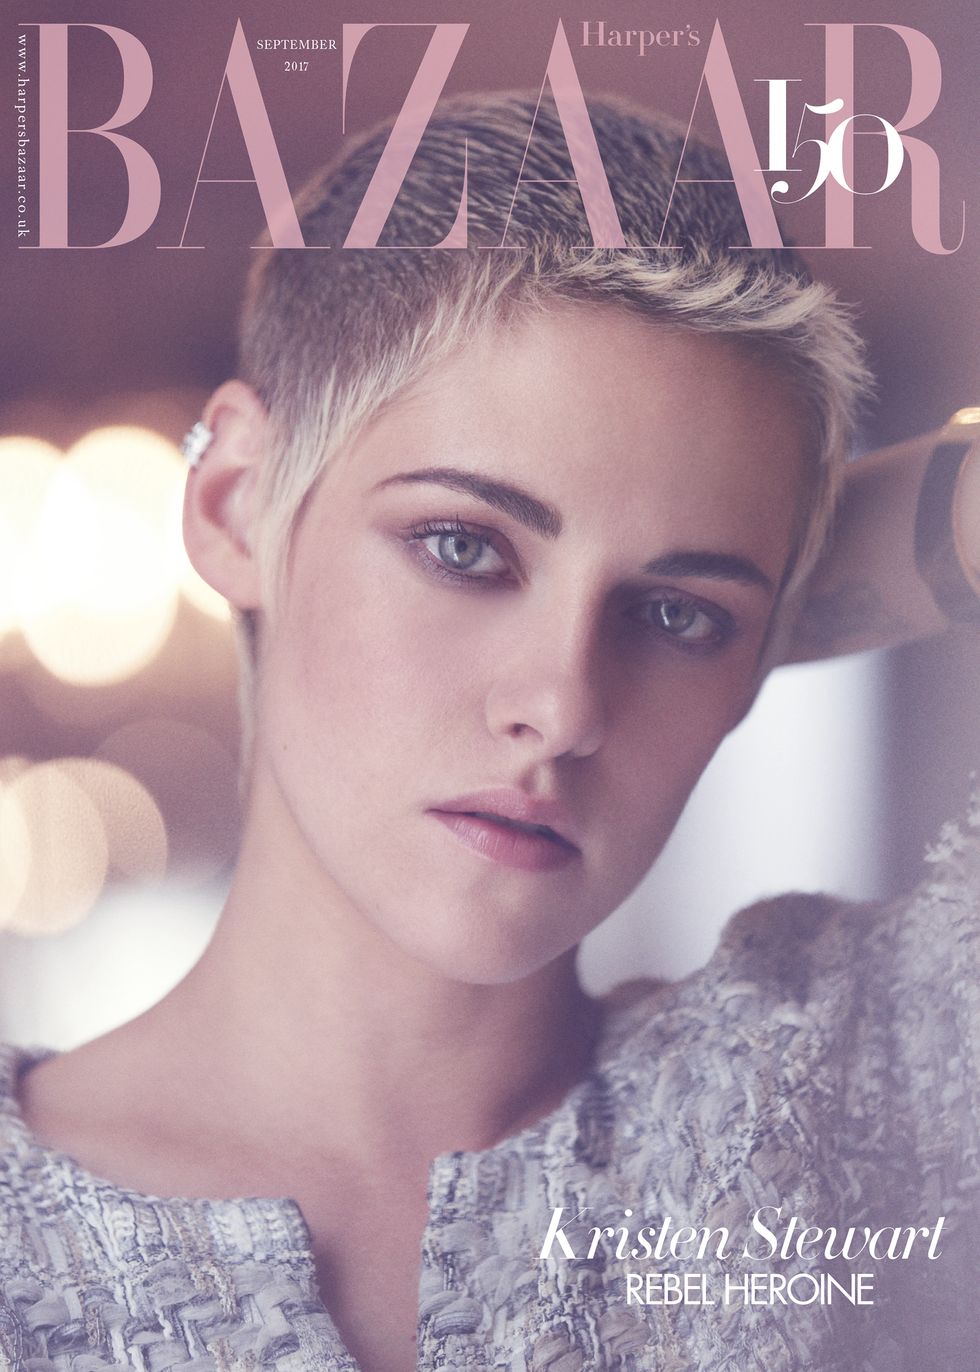 Kristen Stewart September issue Harper's Bazaar subscribers' cover